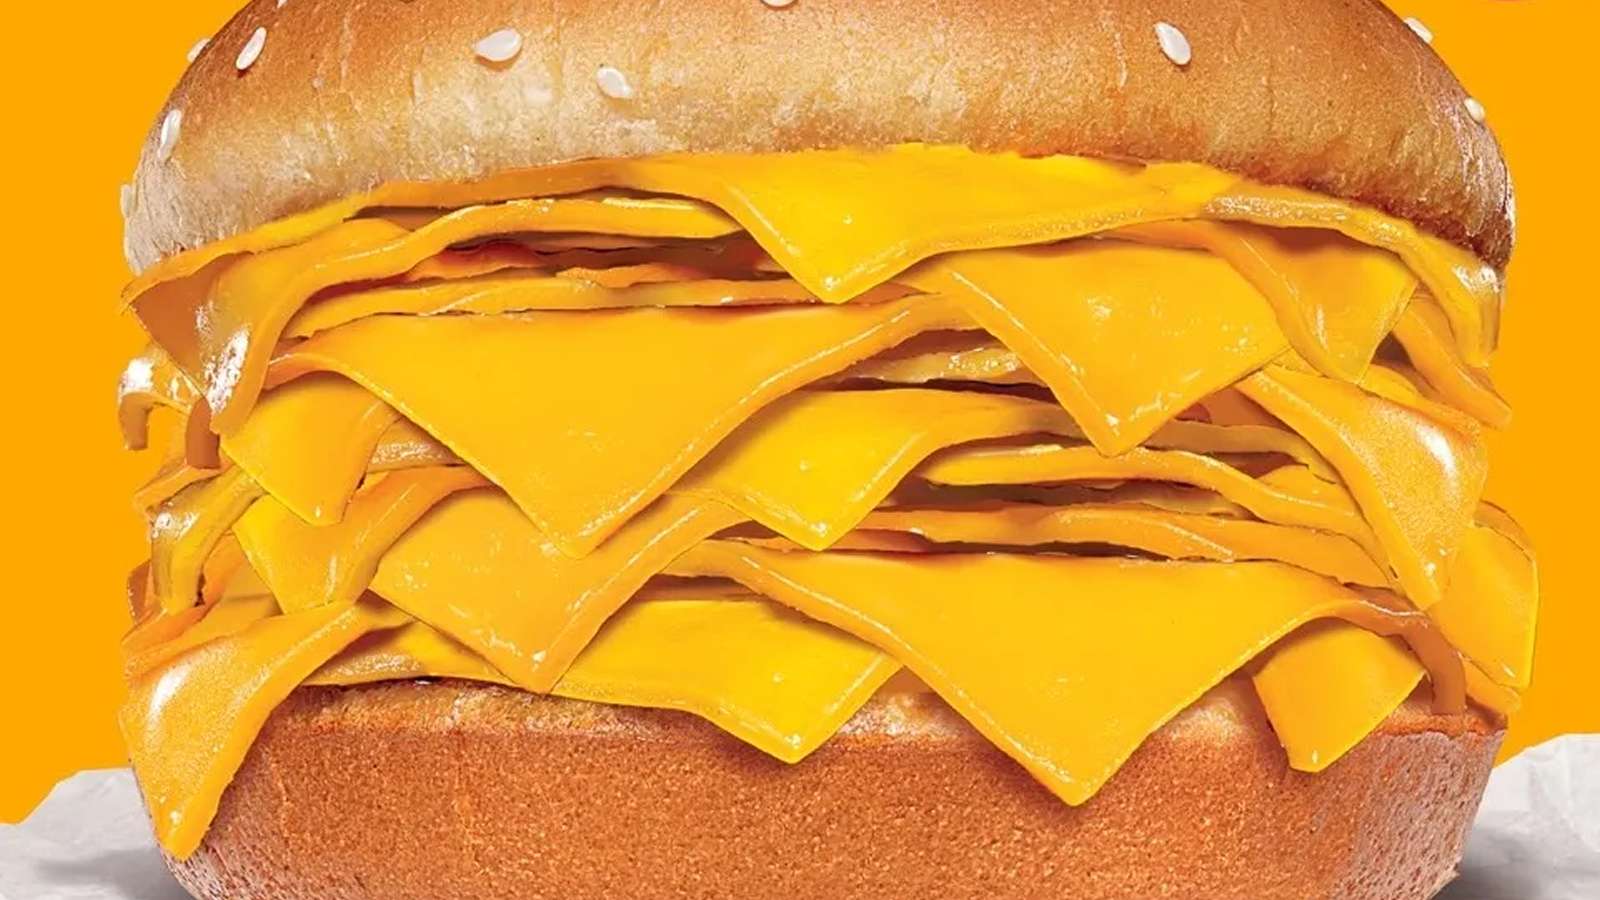 Internet goes wild over Burger King’s real cheeseburger